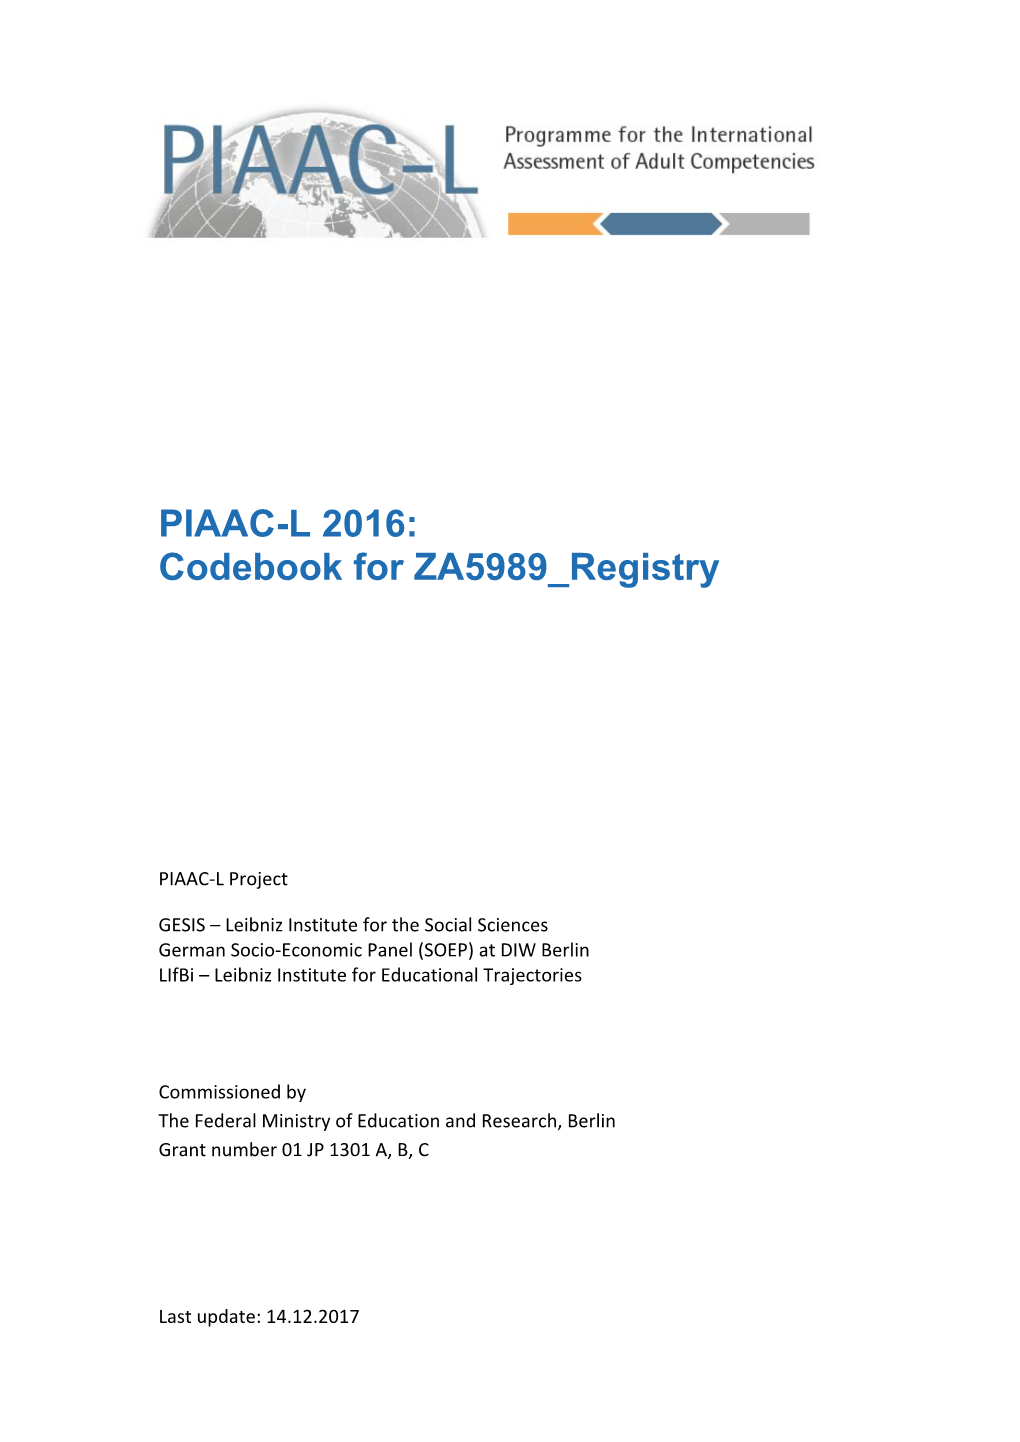 PIAAC-L 2016: Codebook for ZA5989 Registry